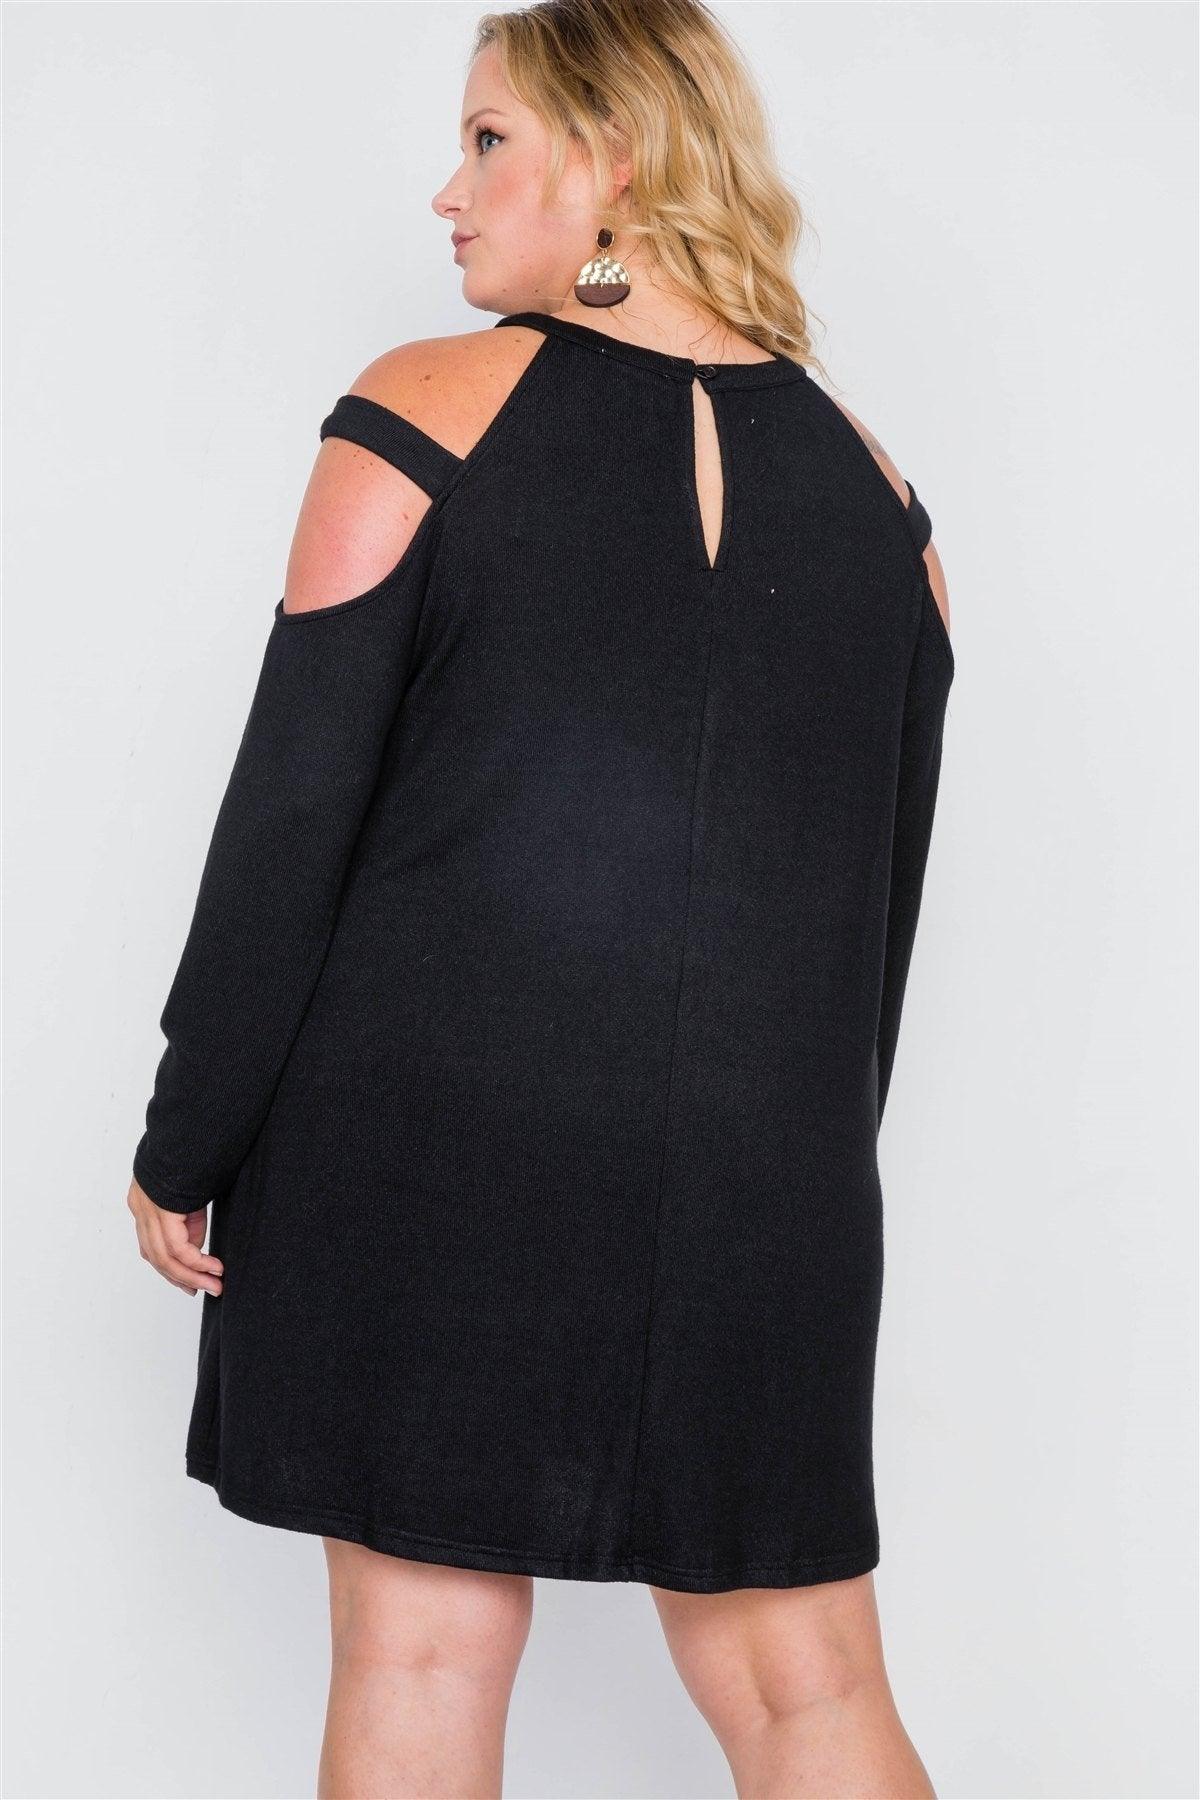 Plus Size Black Knit Strap Shoulder Long Sleeve Dress